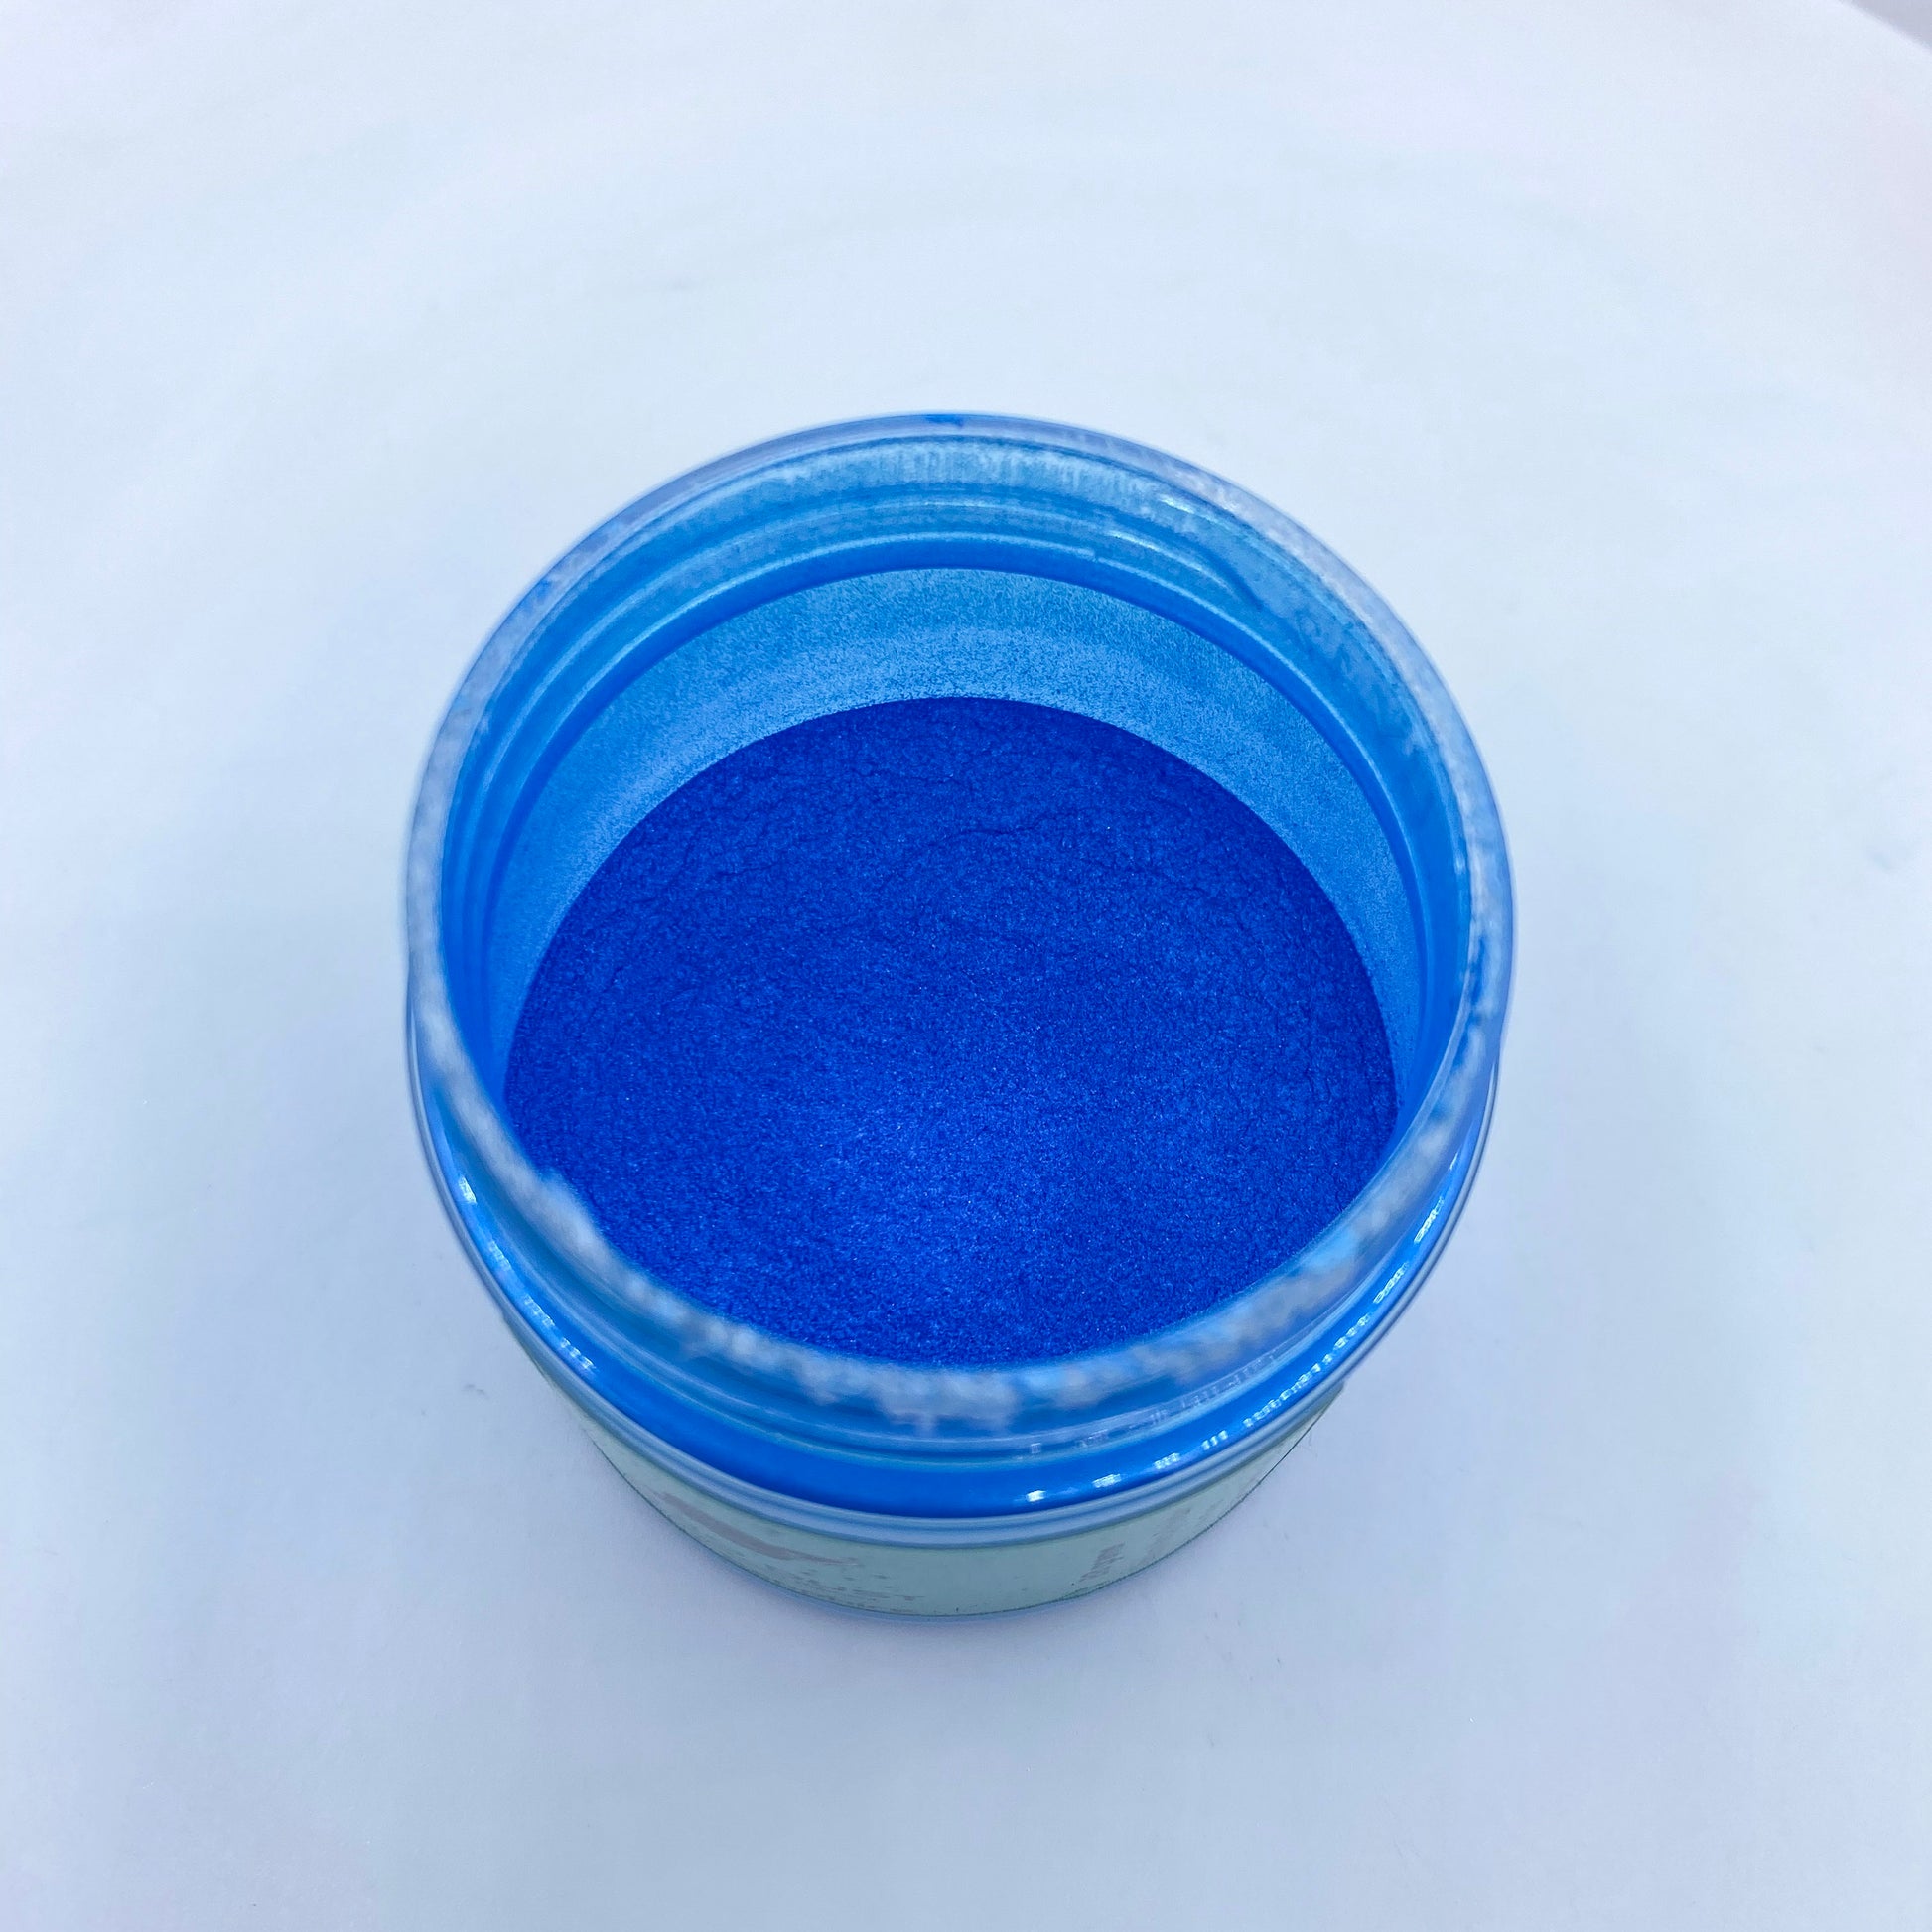 Astro Dust Bright Sapphire Color Pigment - Patrick Adair Supplies